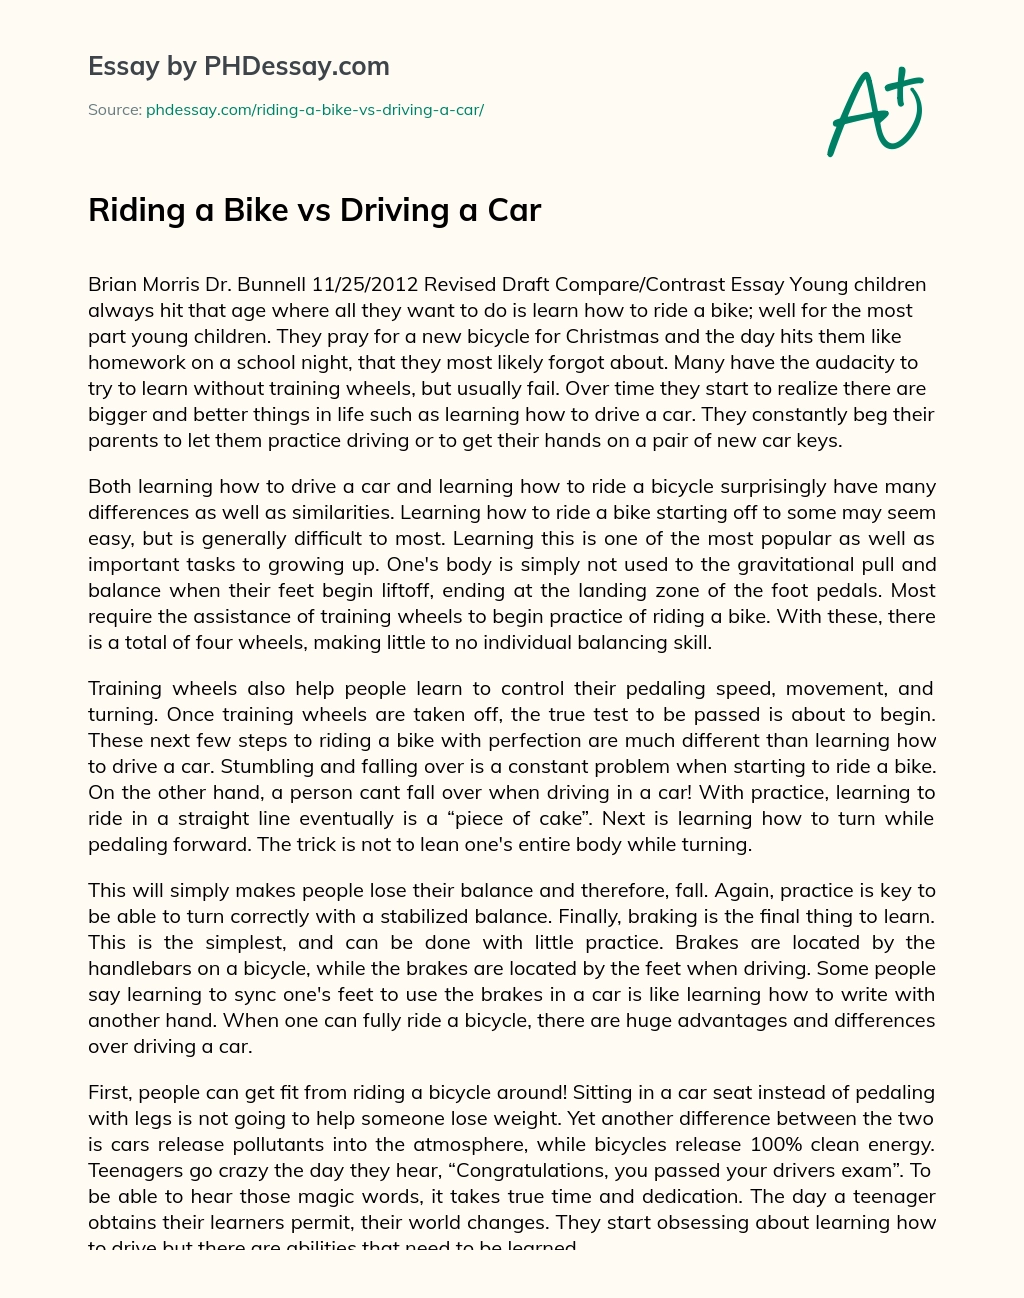 Riding a Bike vs Driving a Car essay